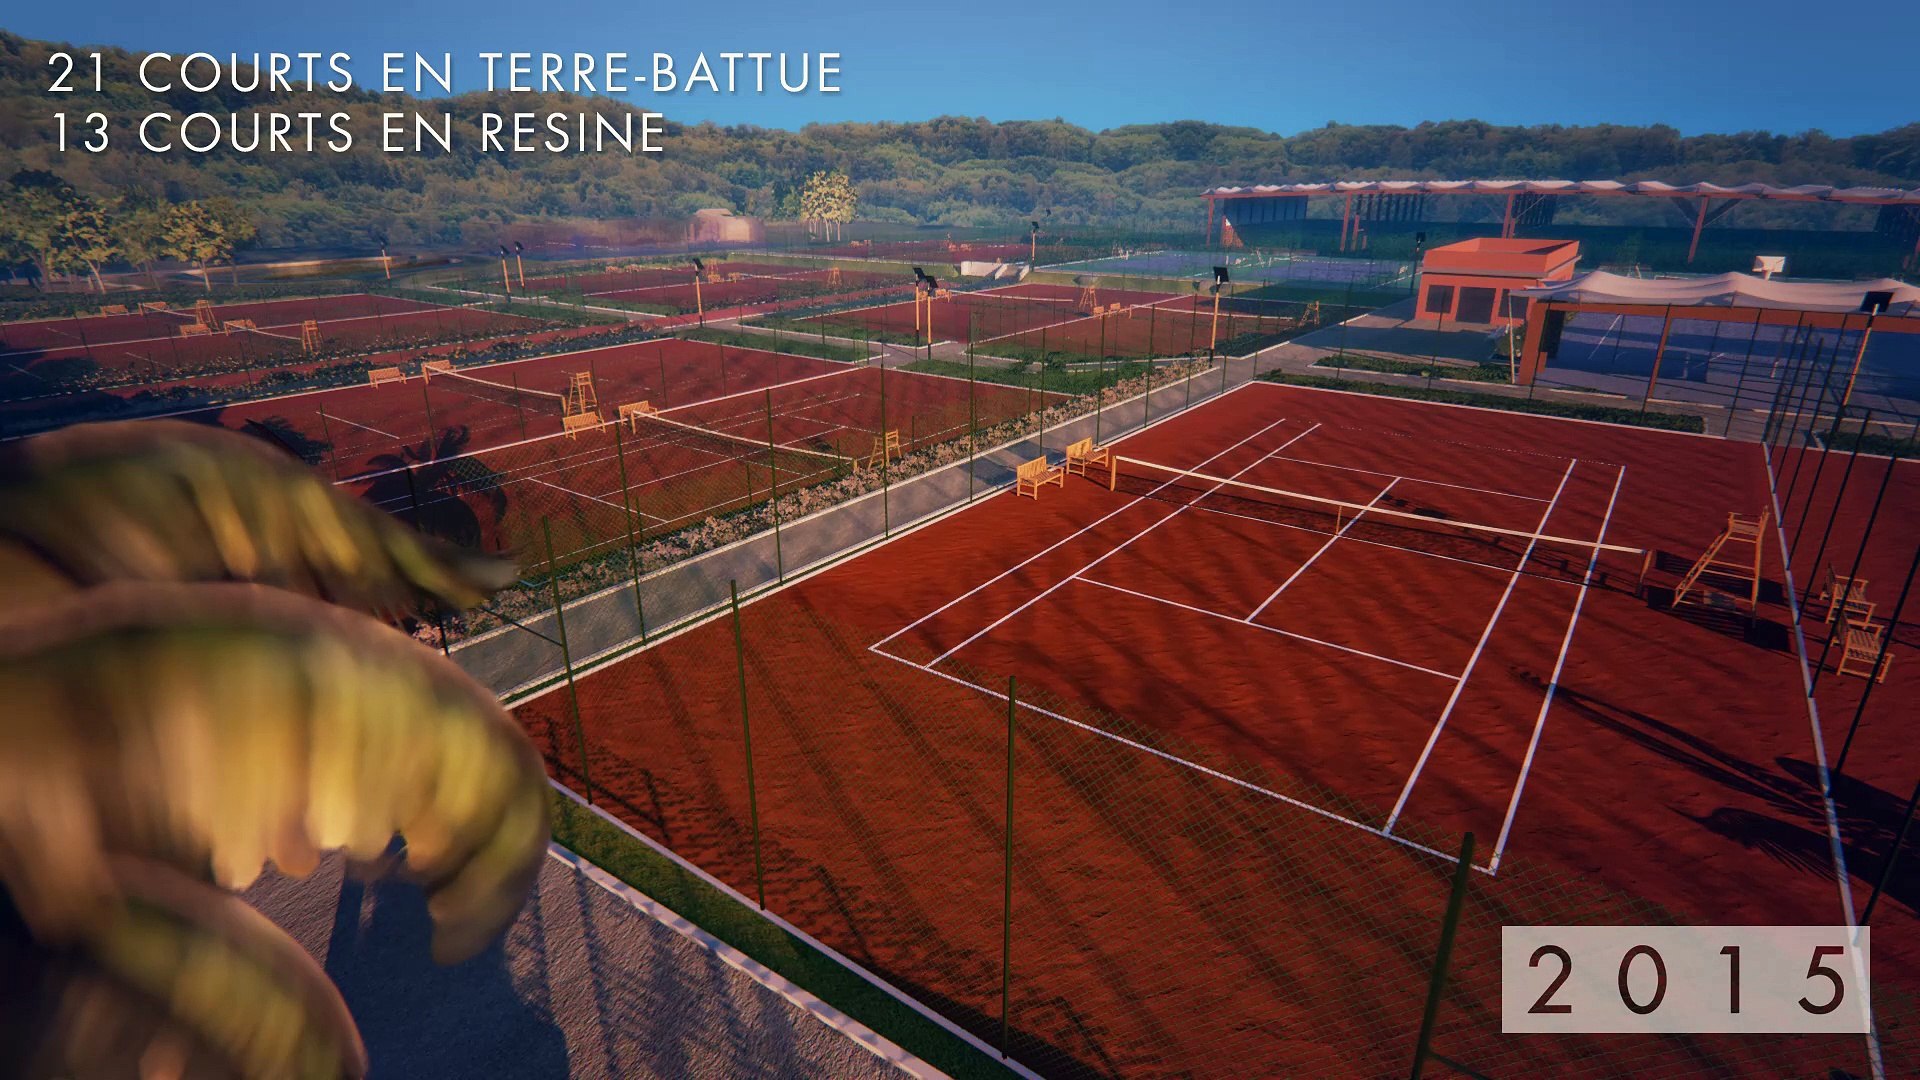 Tennis - ATP / WTA / ITF - La future Mouratoglou Tennis Academy à Sophia- Antipolis - Vidéo Dailymotion